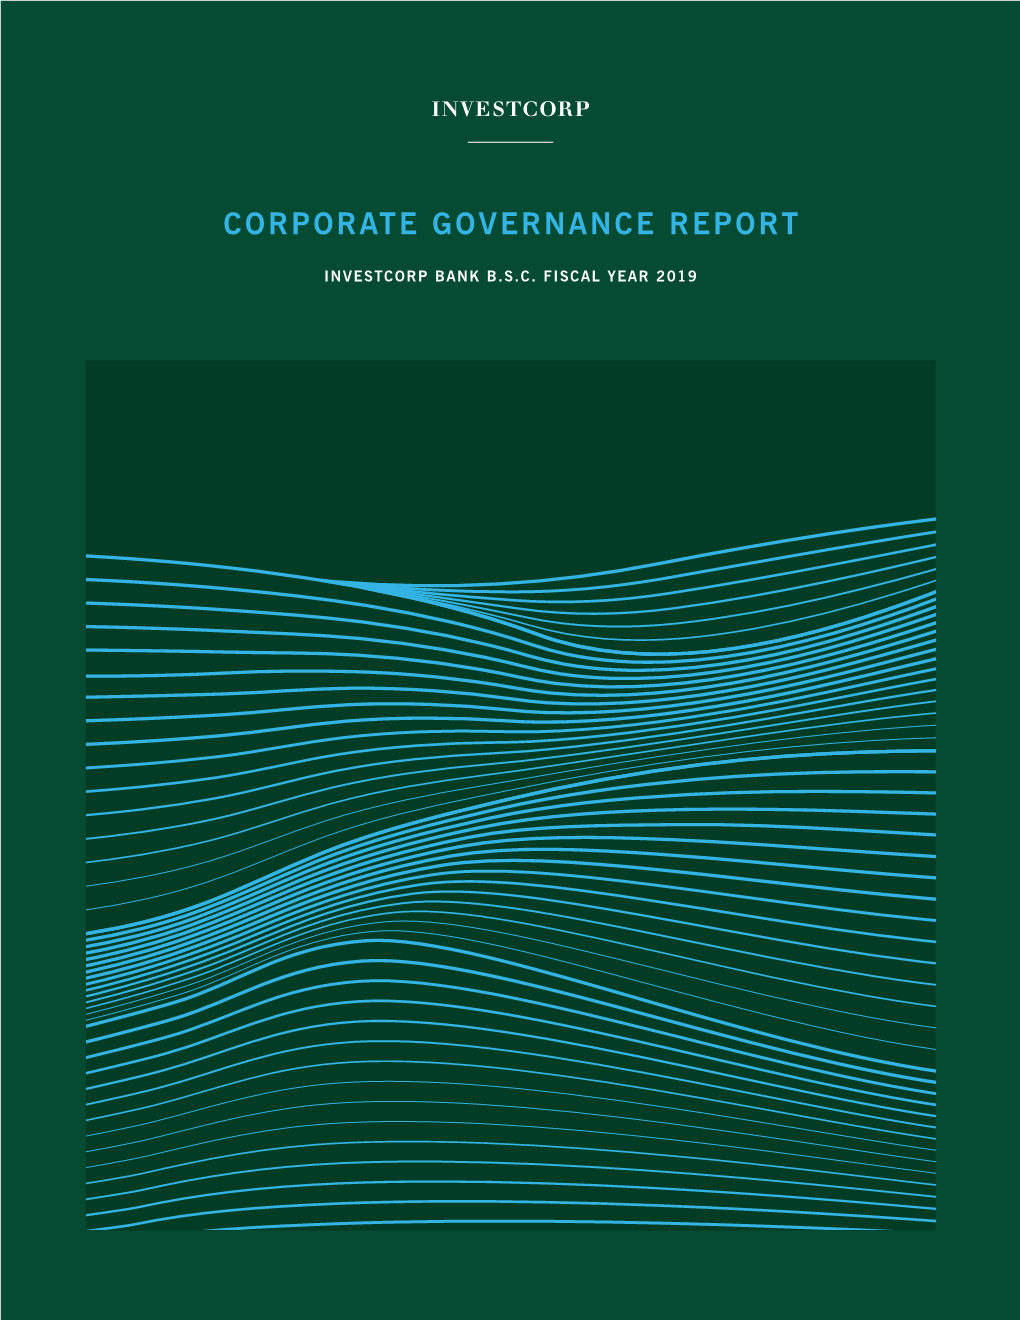 2019 Corporate Governance Report